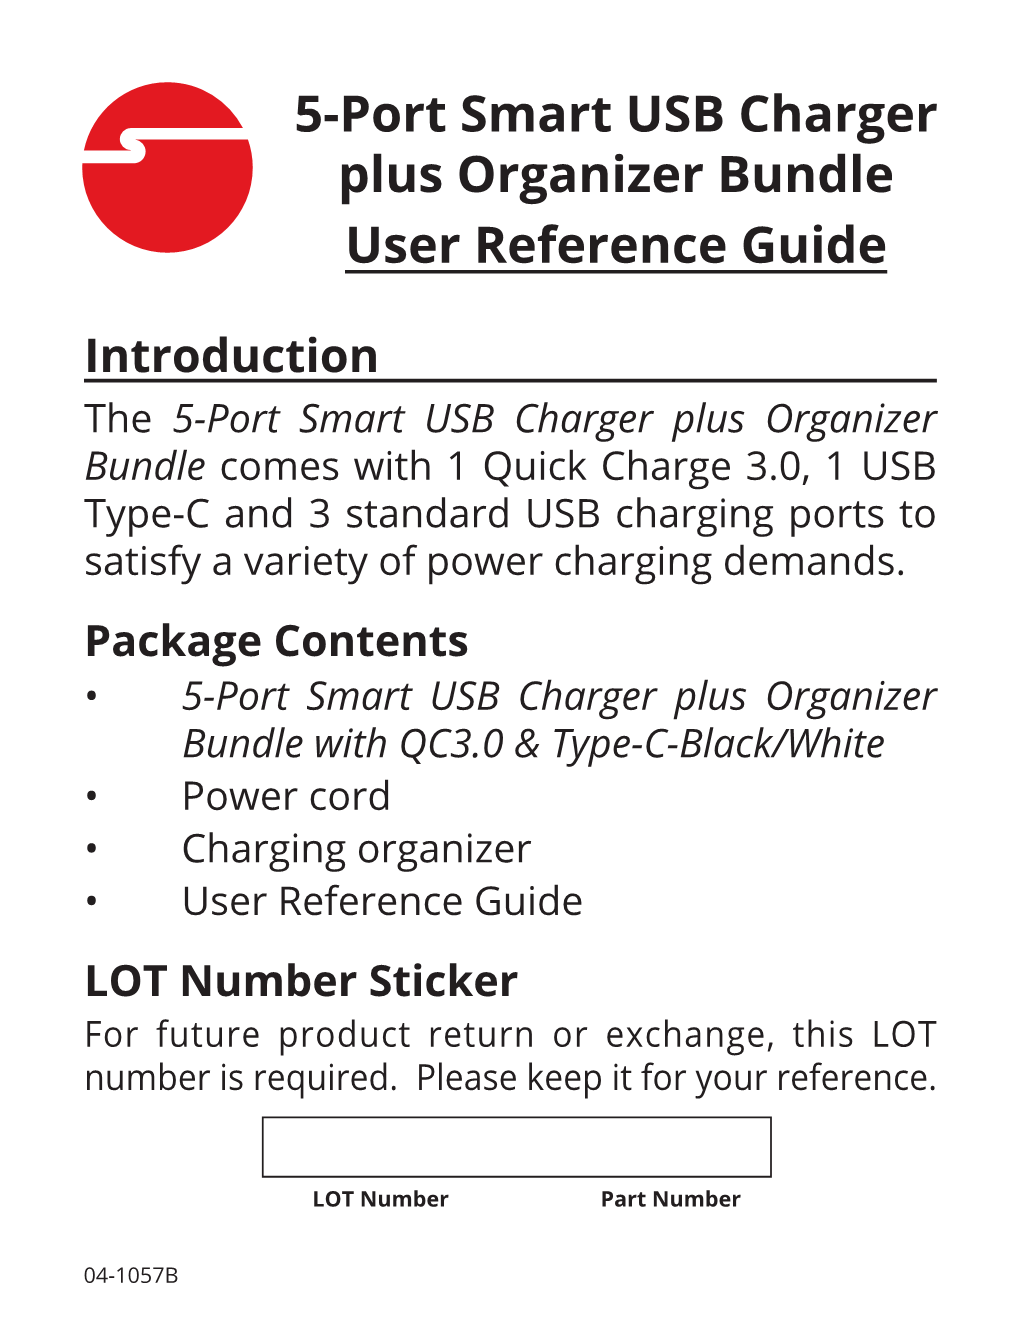 5-Port Smart USB Charger Plus Organizer Bundle User Reference Guide